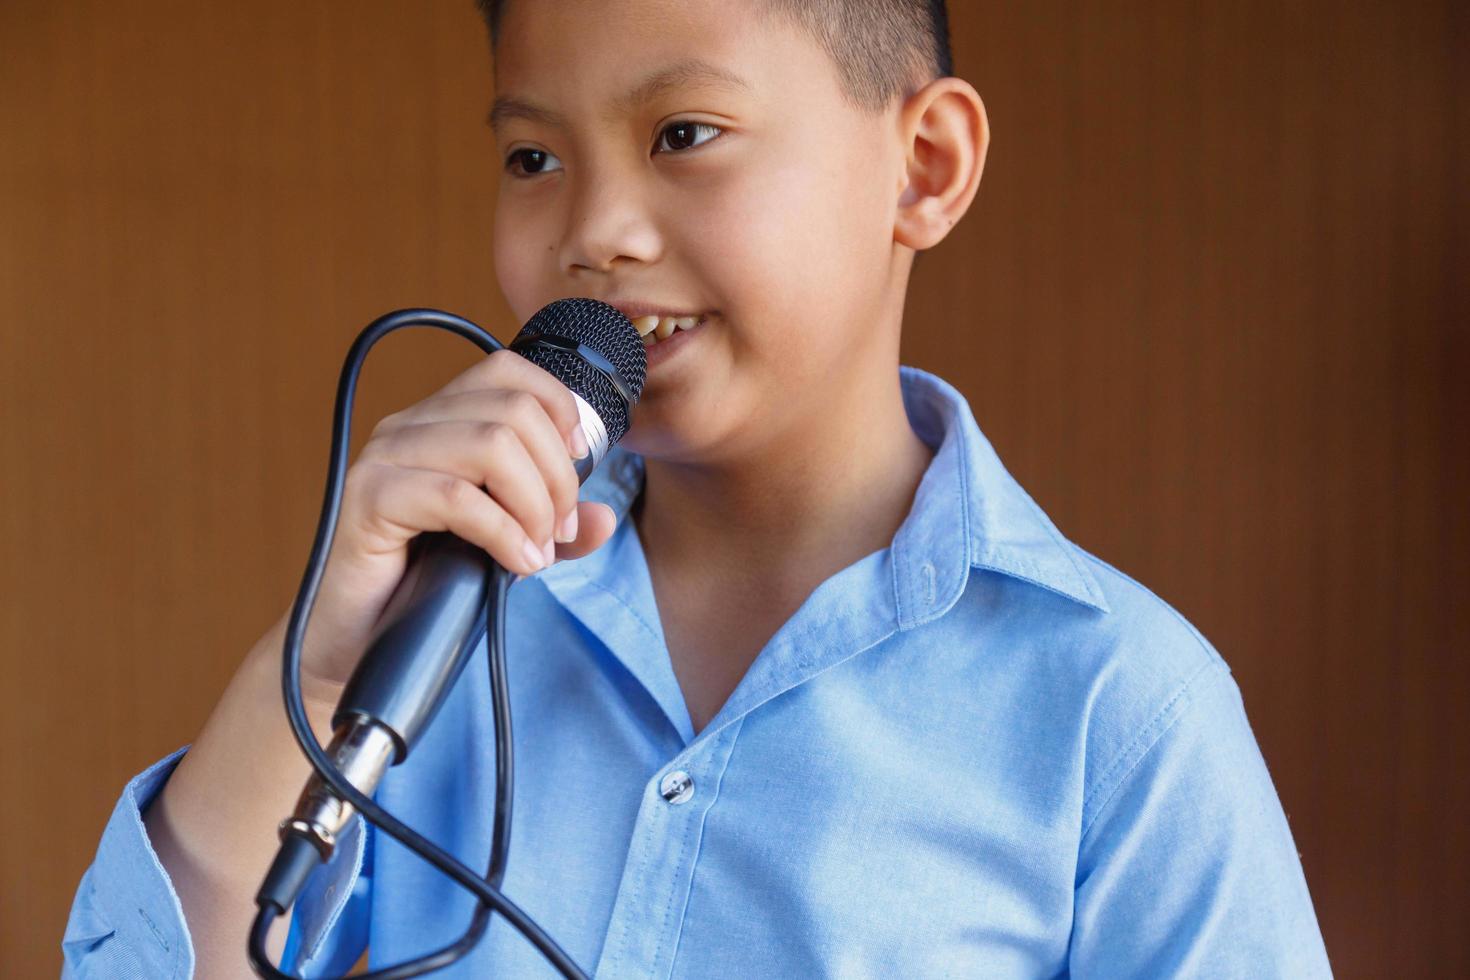 les garçons avec microphone apprennent à chanter photo